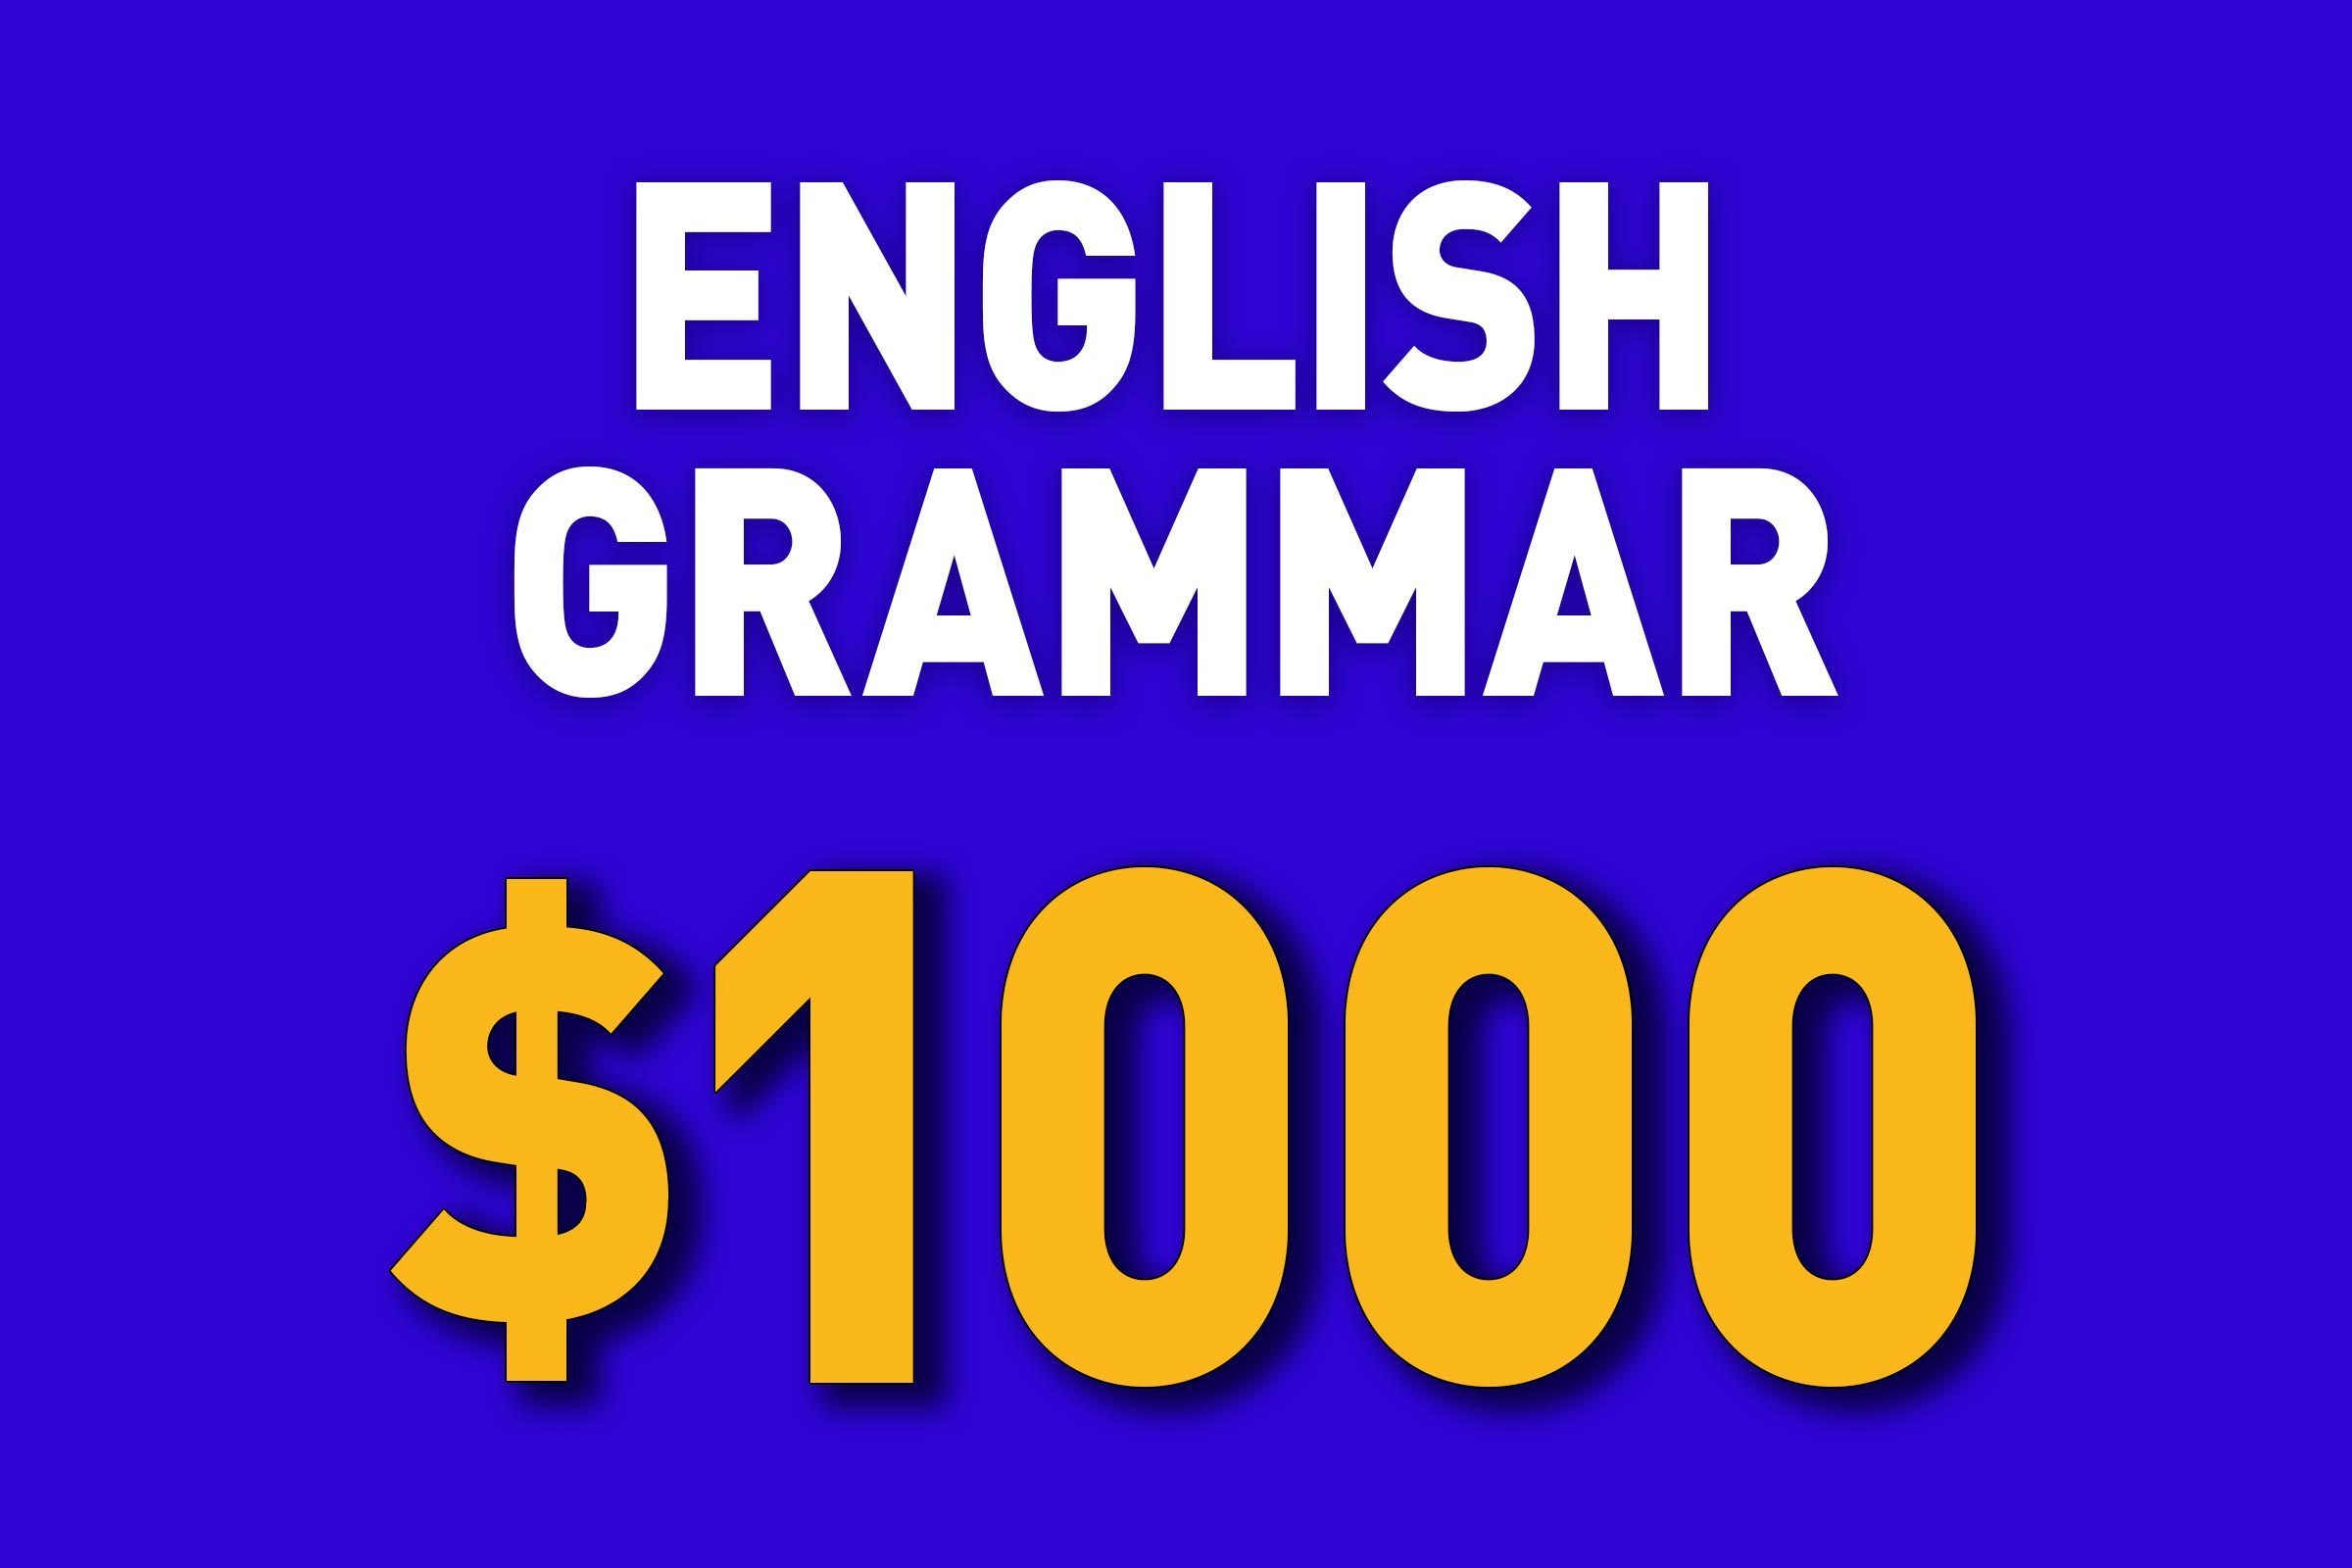 English Grammar for $1000